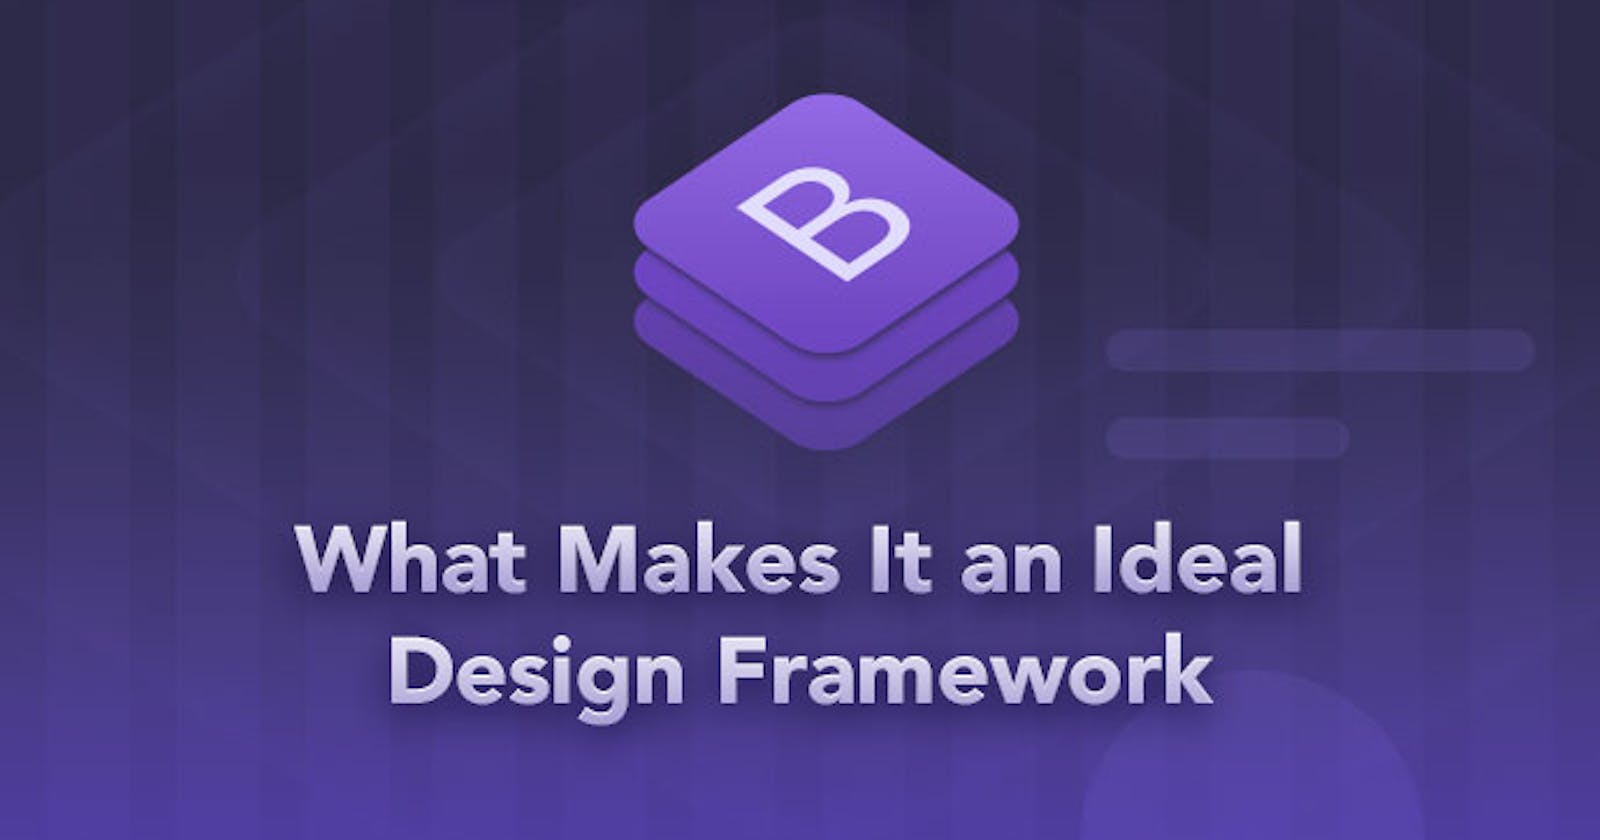 Bootstrap: What makes it an Ideal Design Framework?